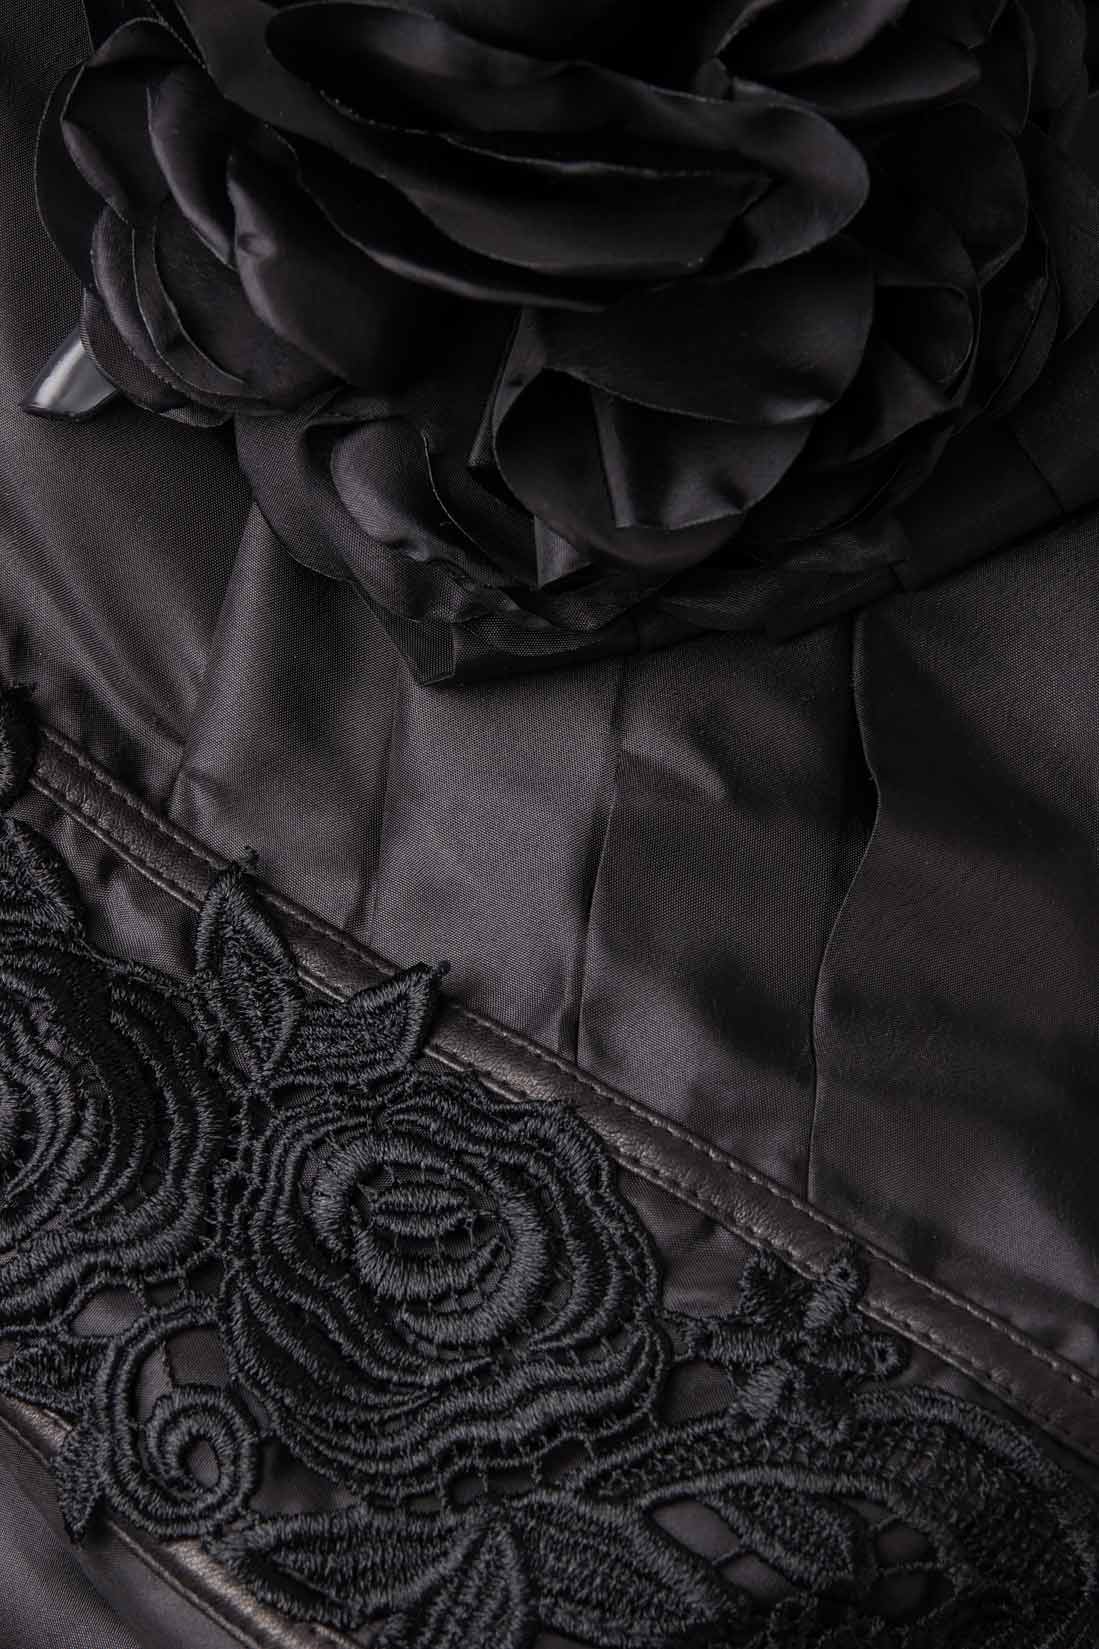 Robe noire avec une fleur appliquee Anca si Silvia Negulescu image 4